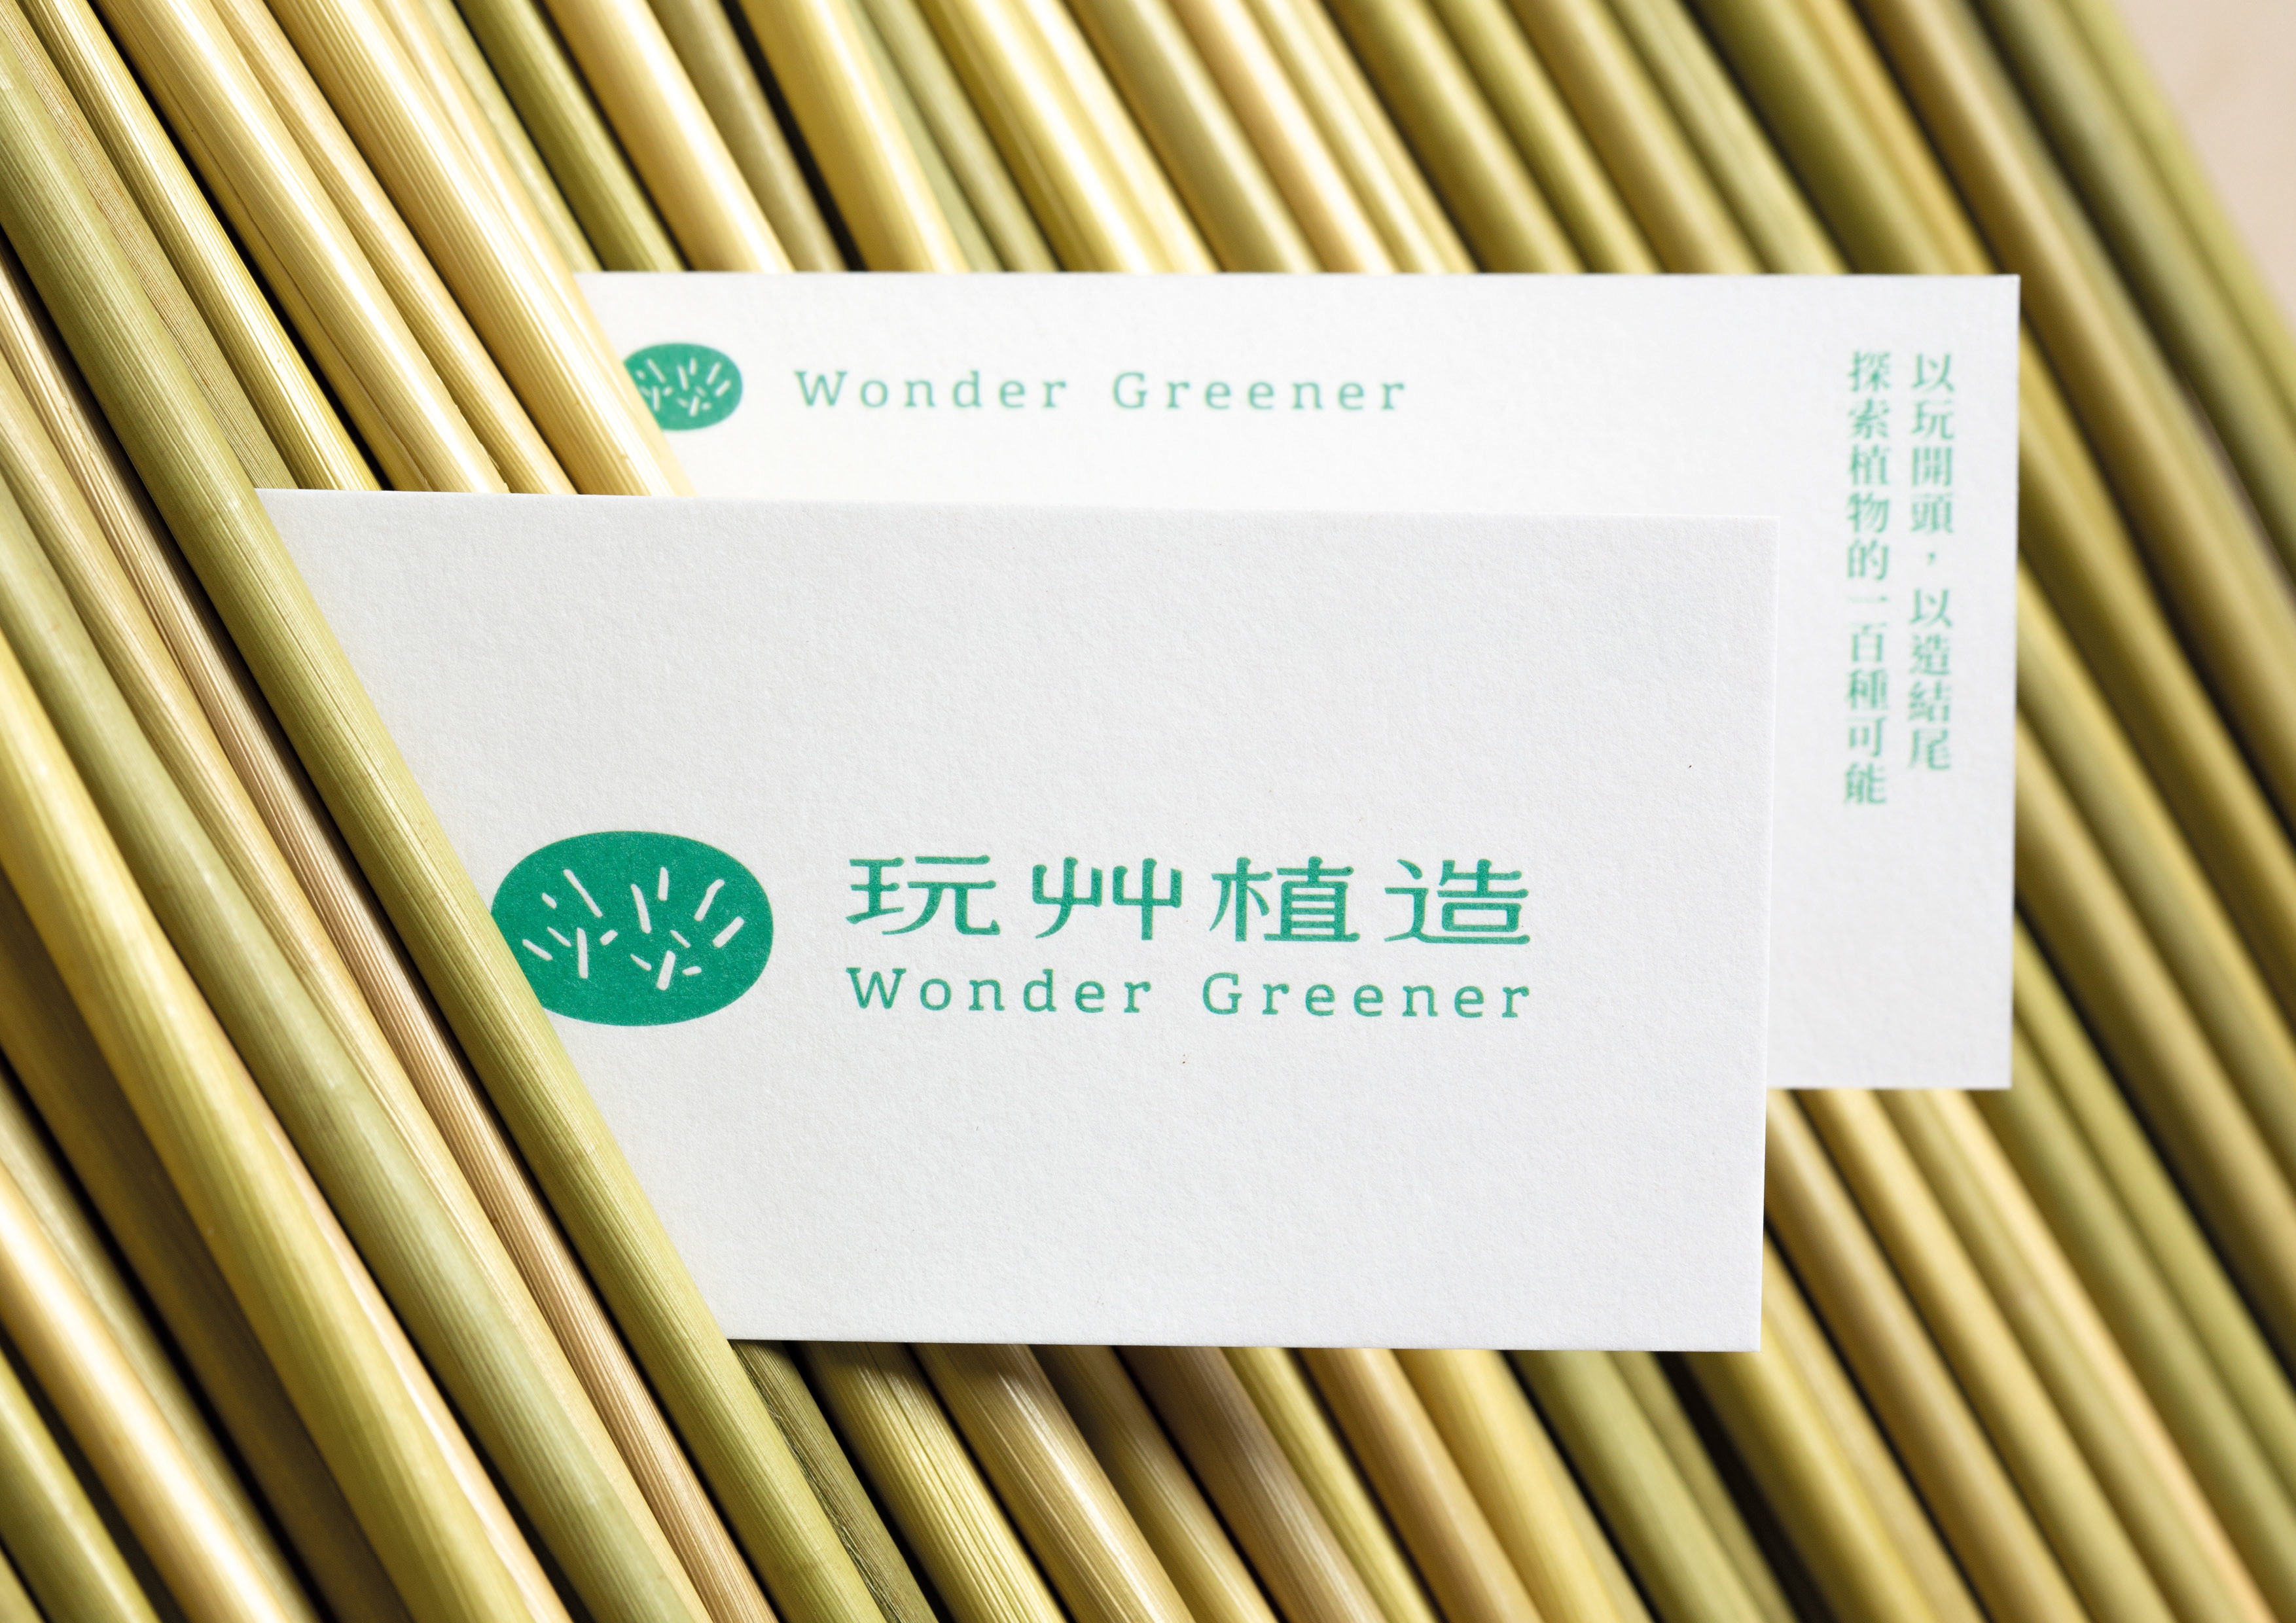 Wonder Greener